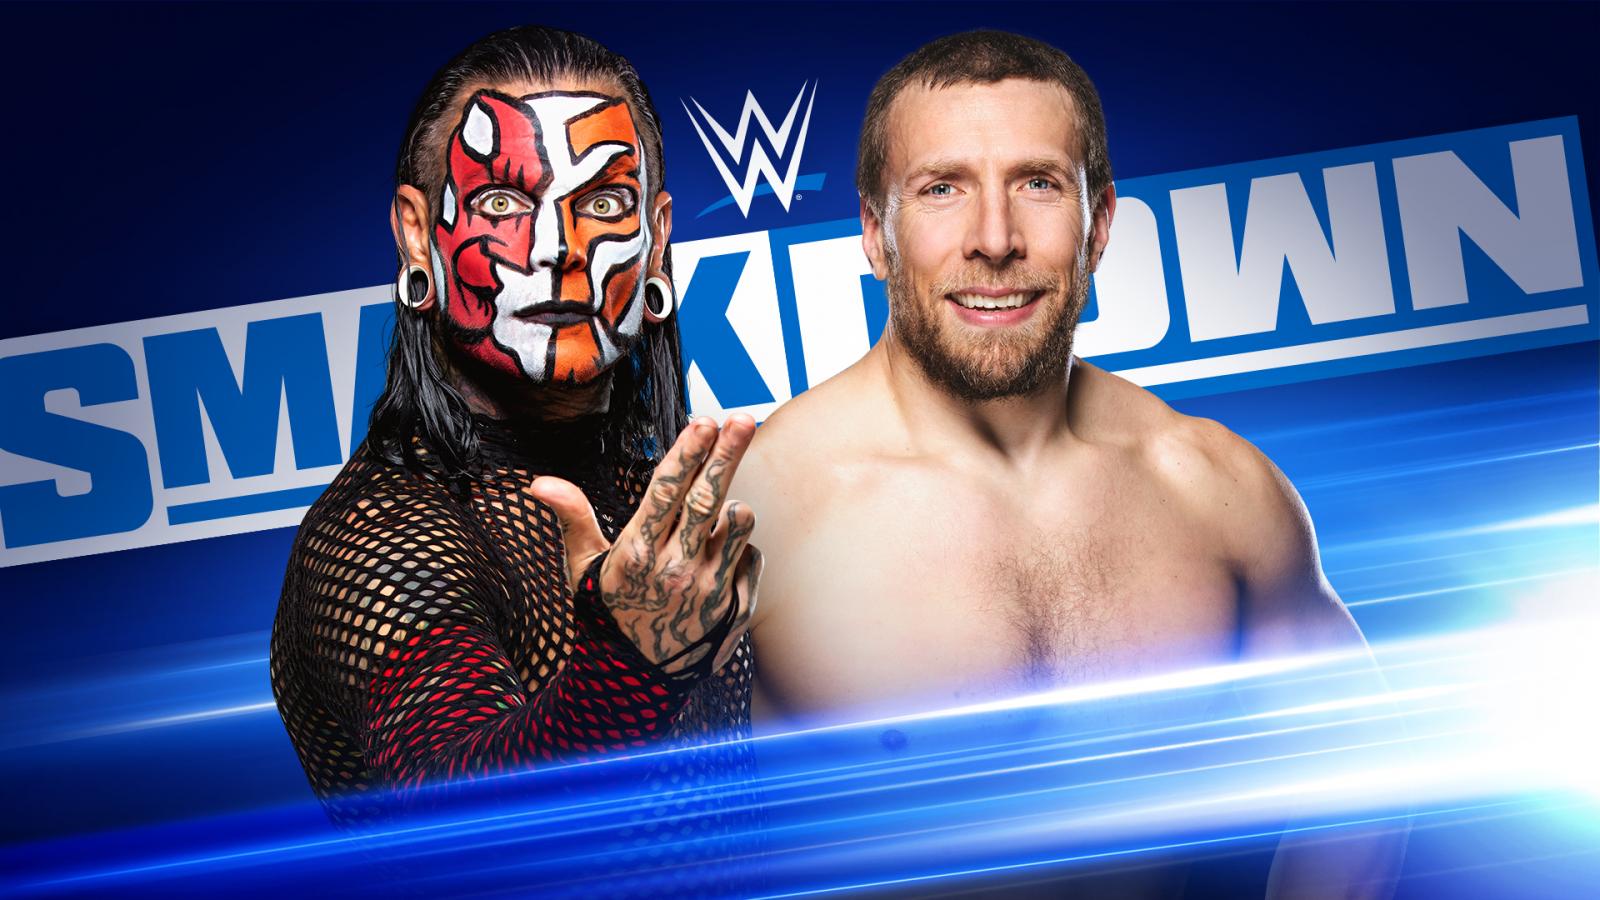 Jeff Hardy vs Daniel Bryan - WWE SmackDown 2020